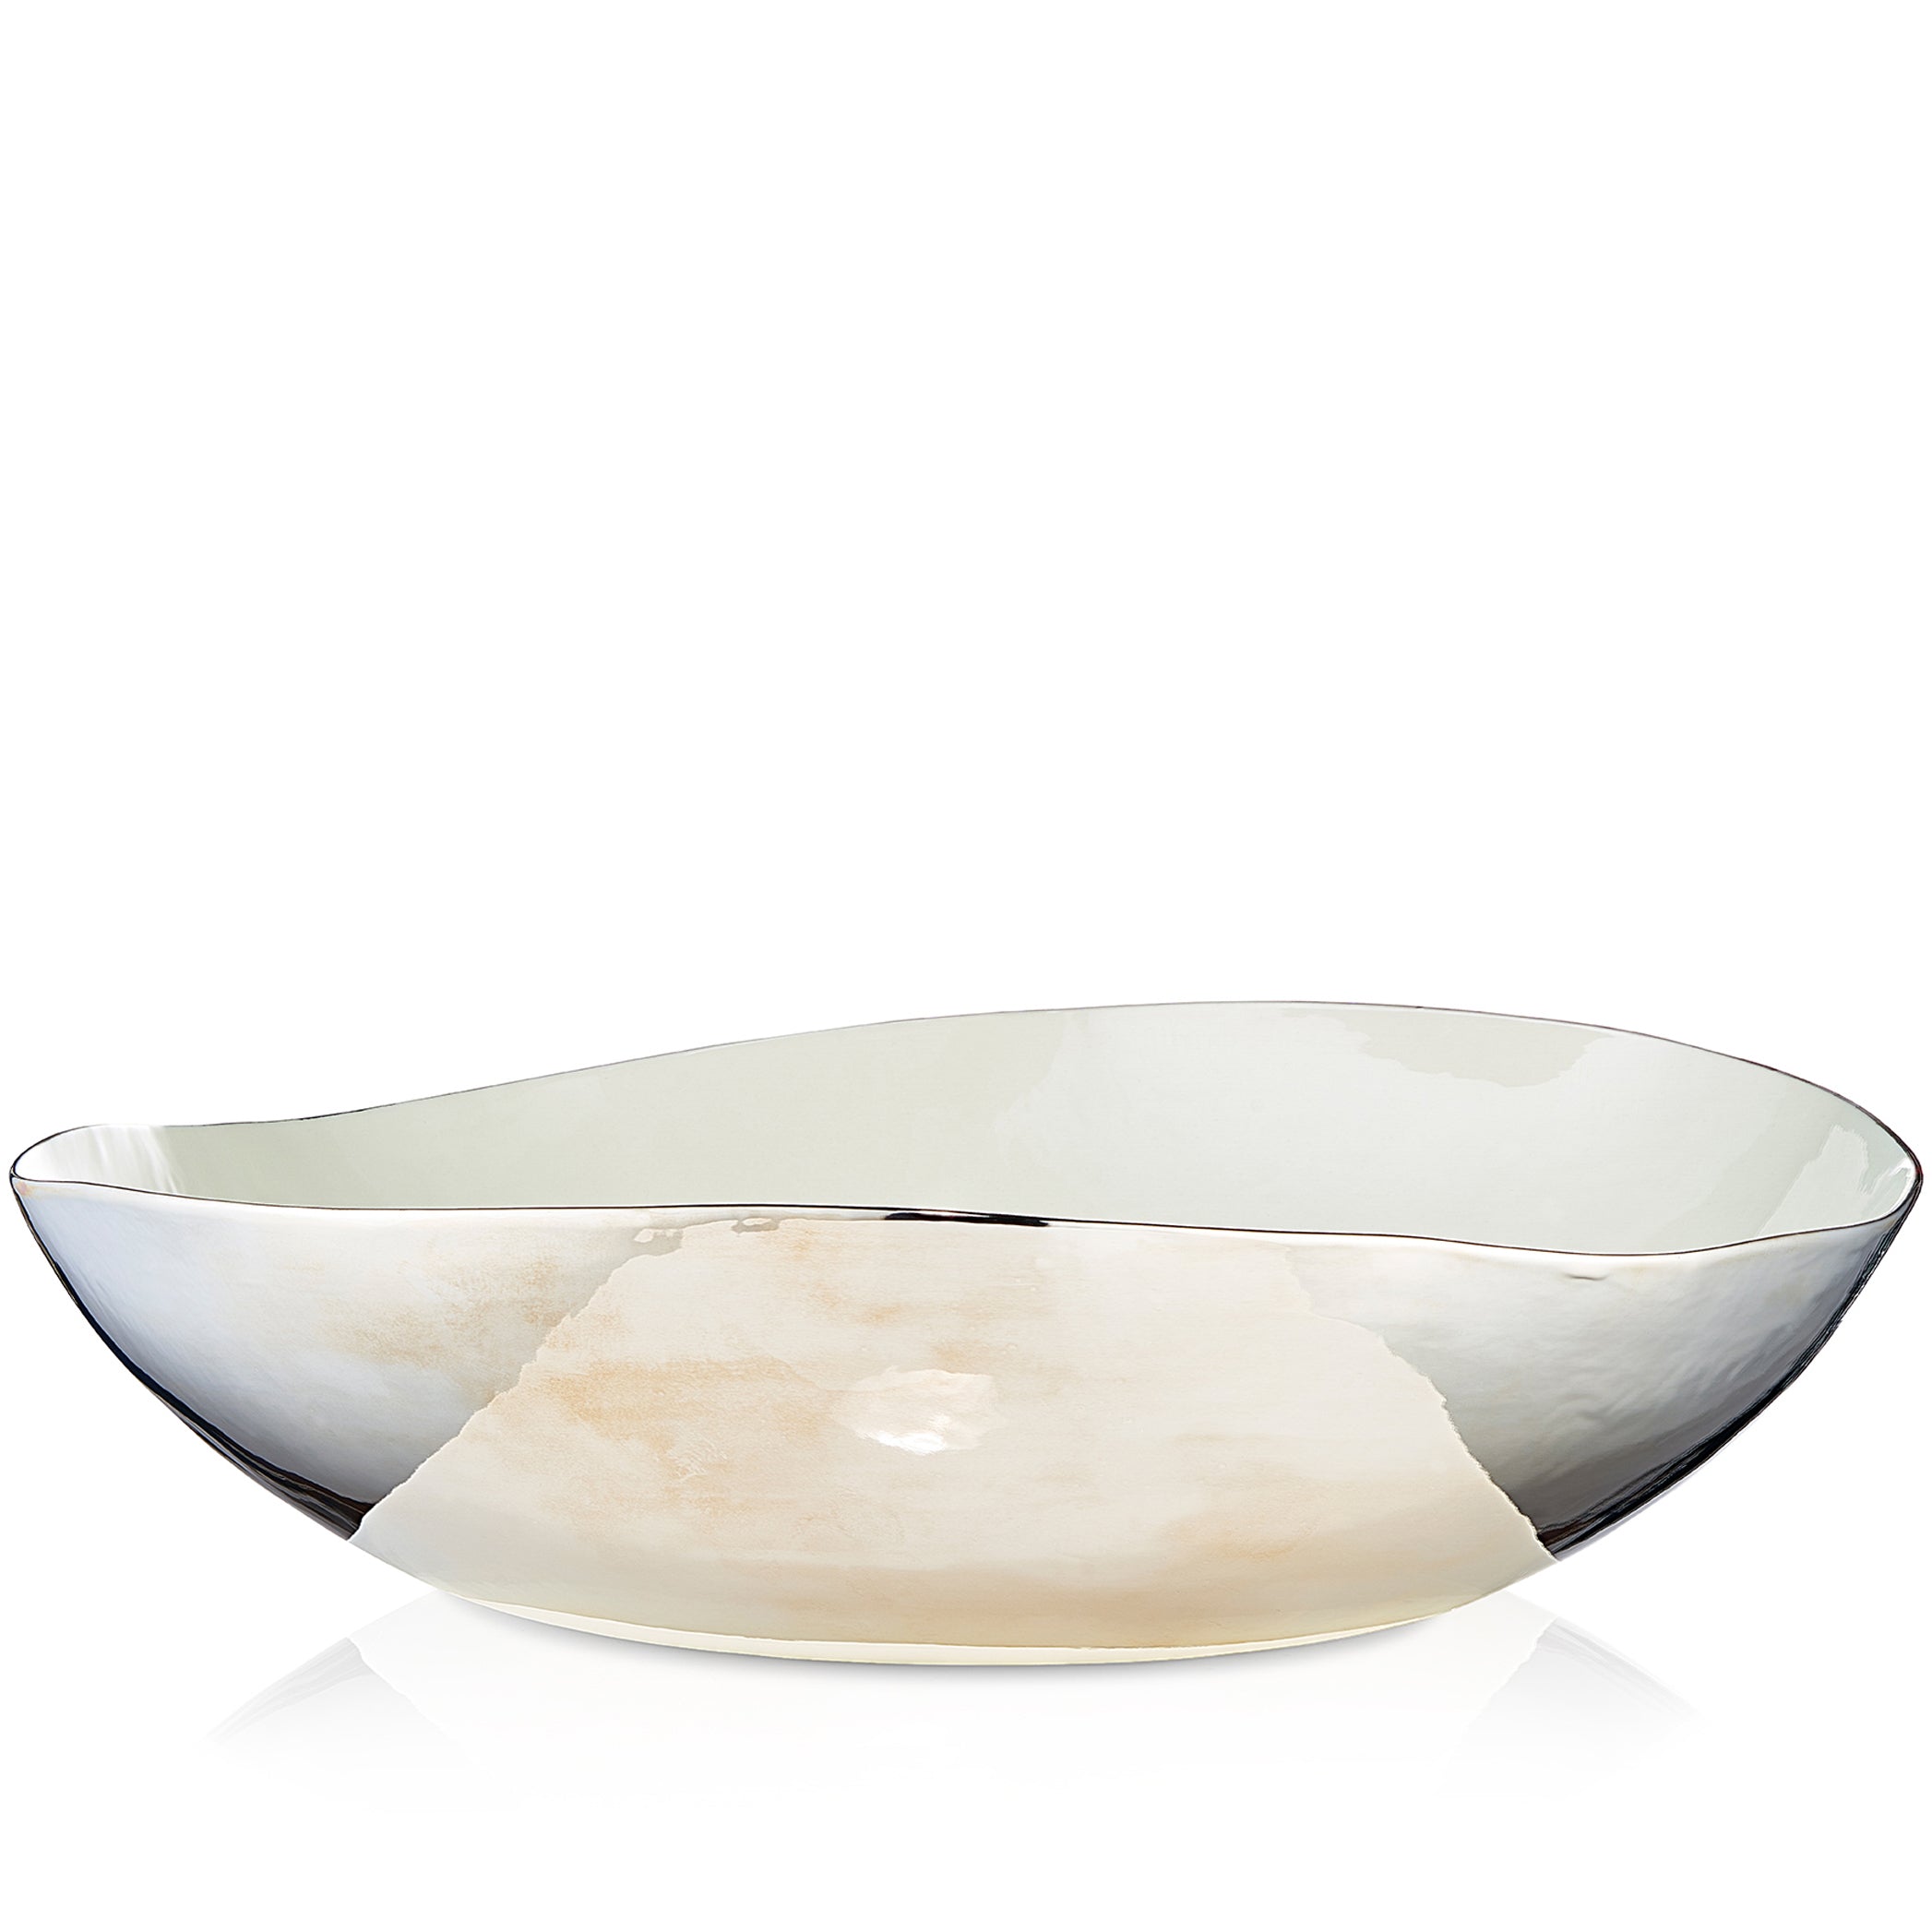 Handmade Round Ceramic Salad Serving Bowl in Silver Exterior Glaze, 43cm